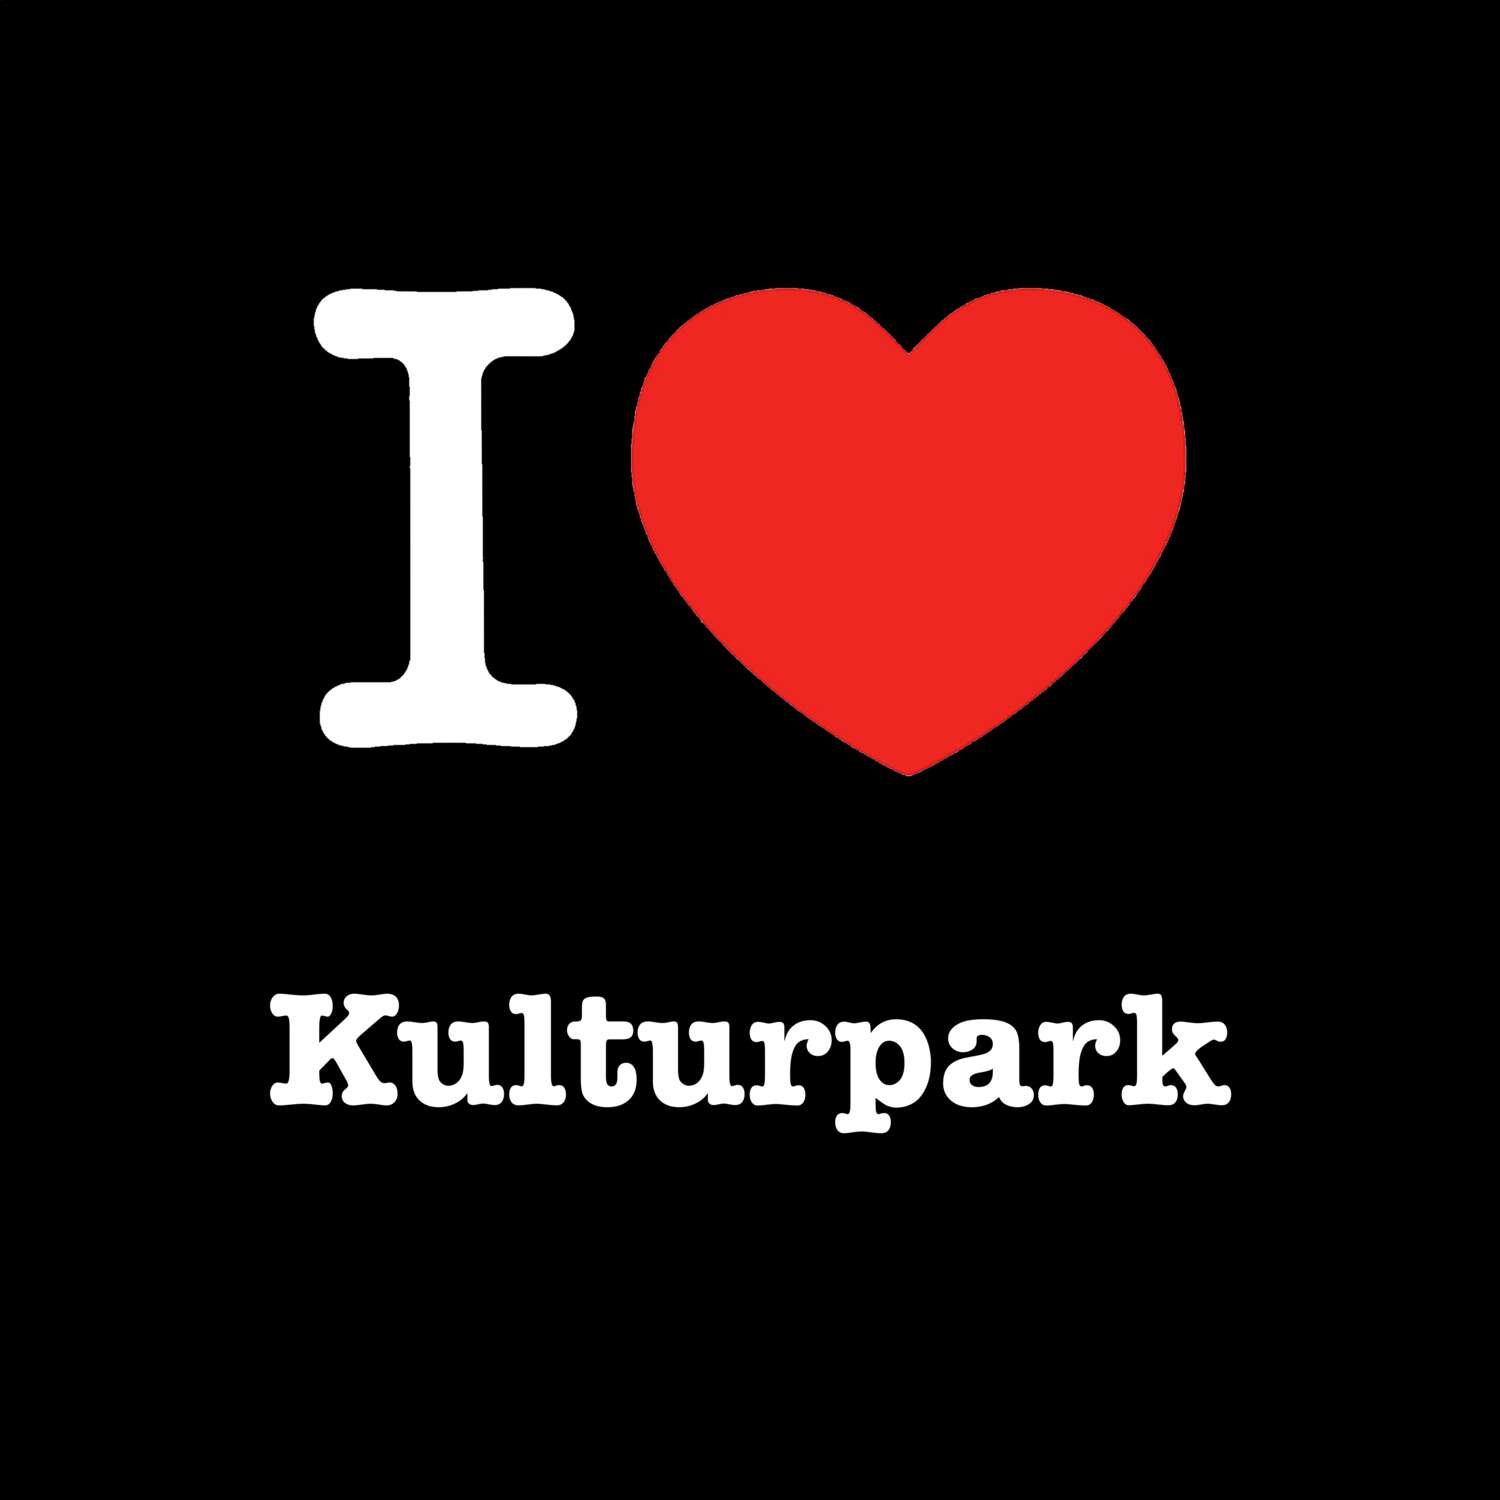 Kulturpark T-Shirt »I love«